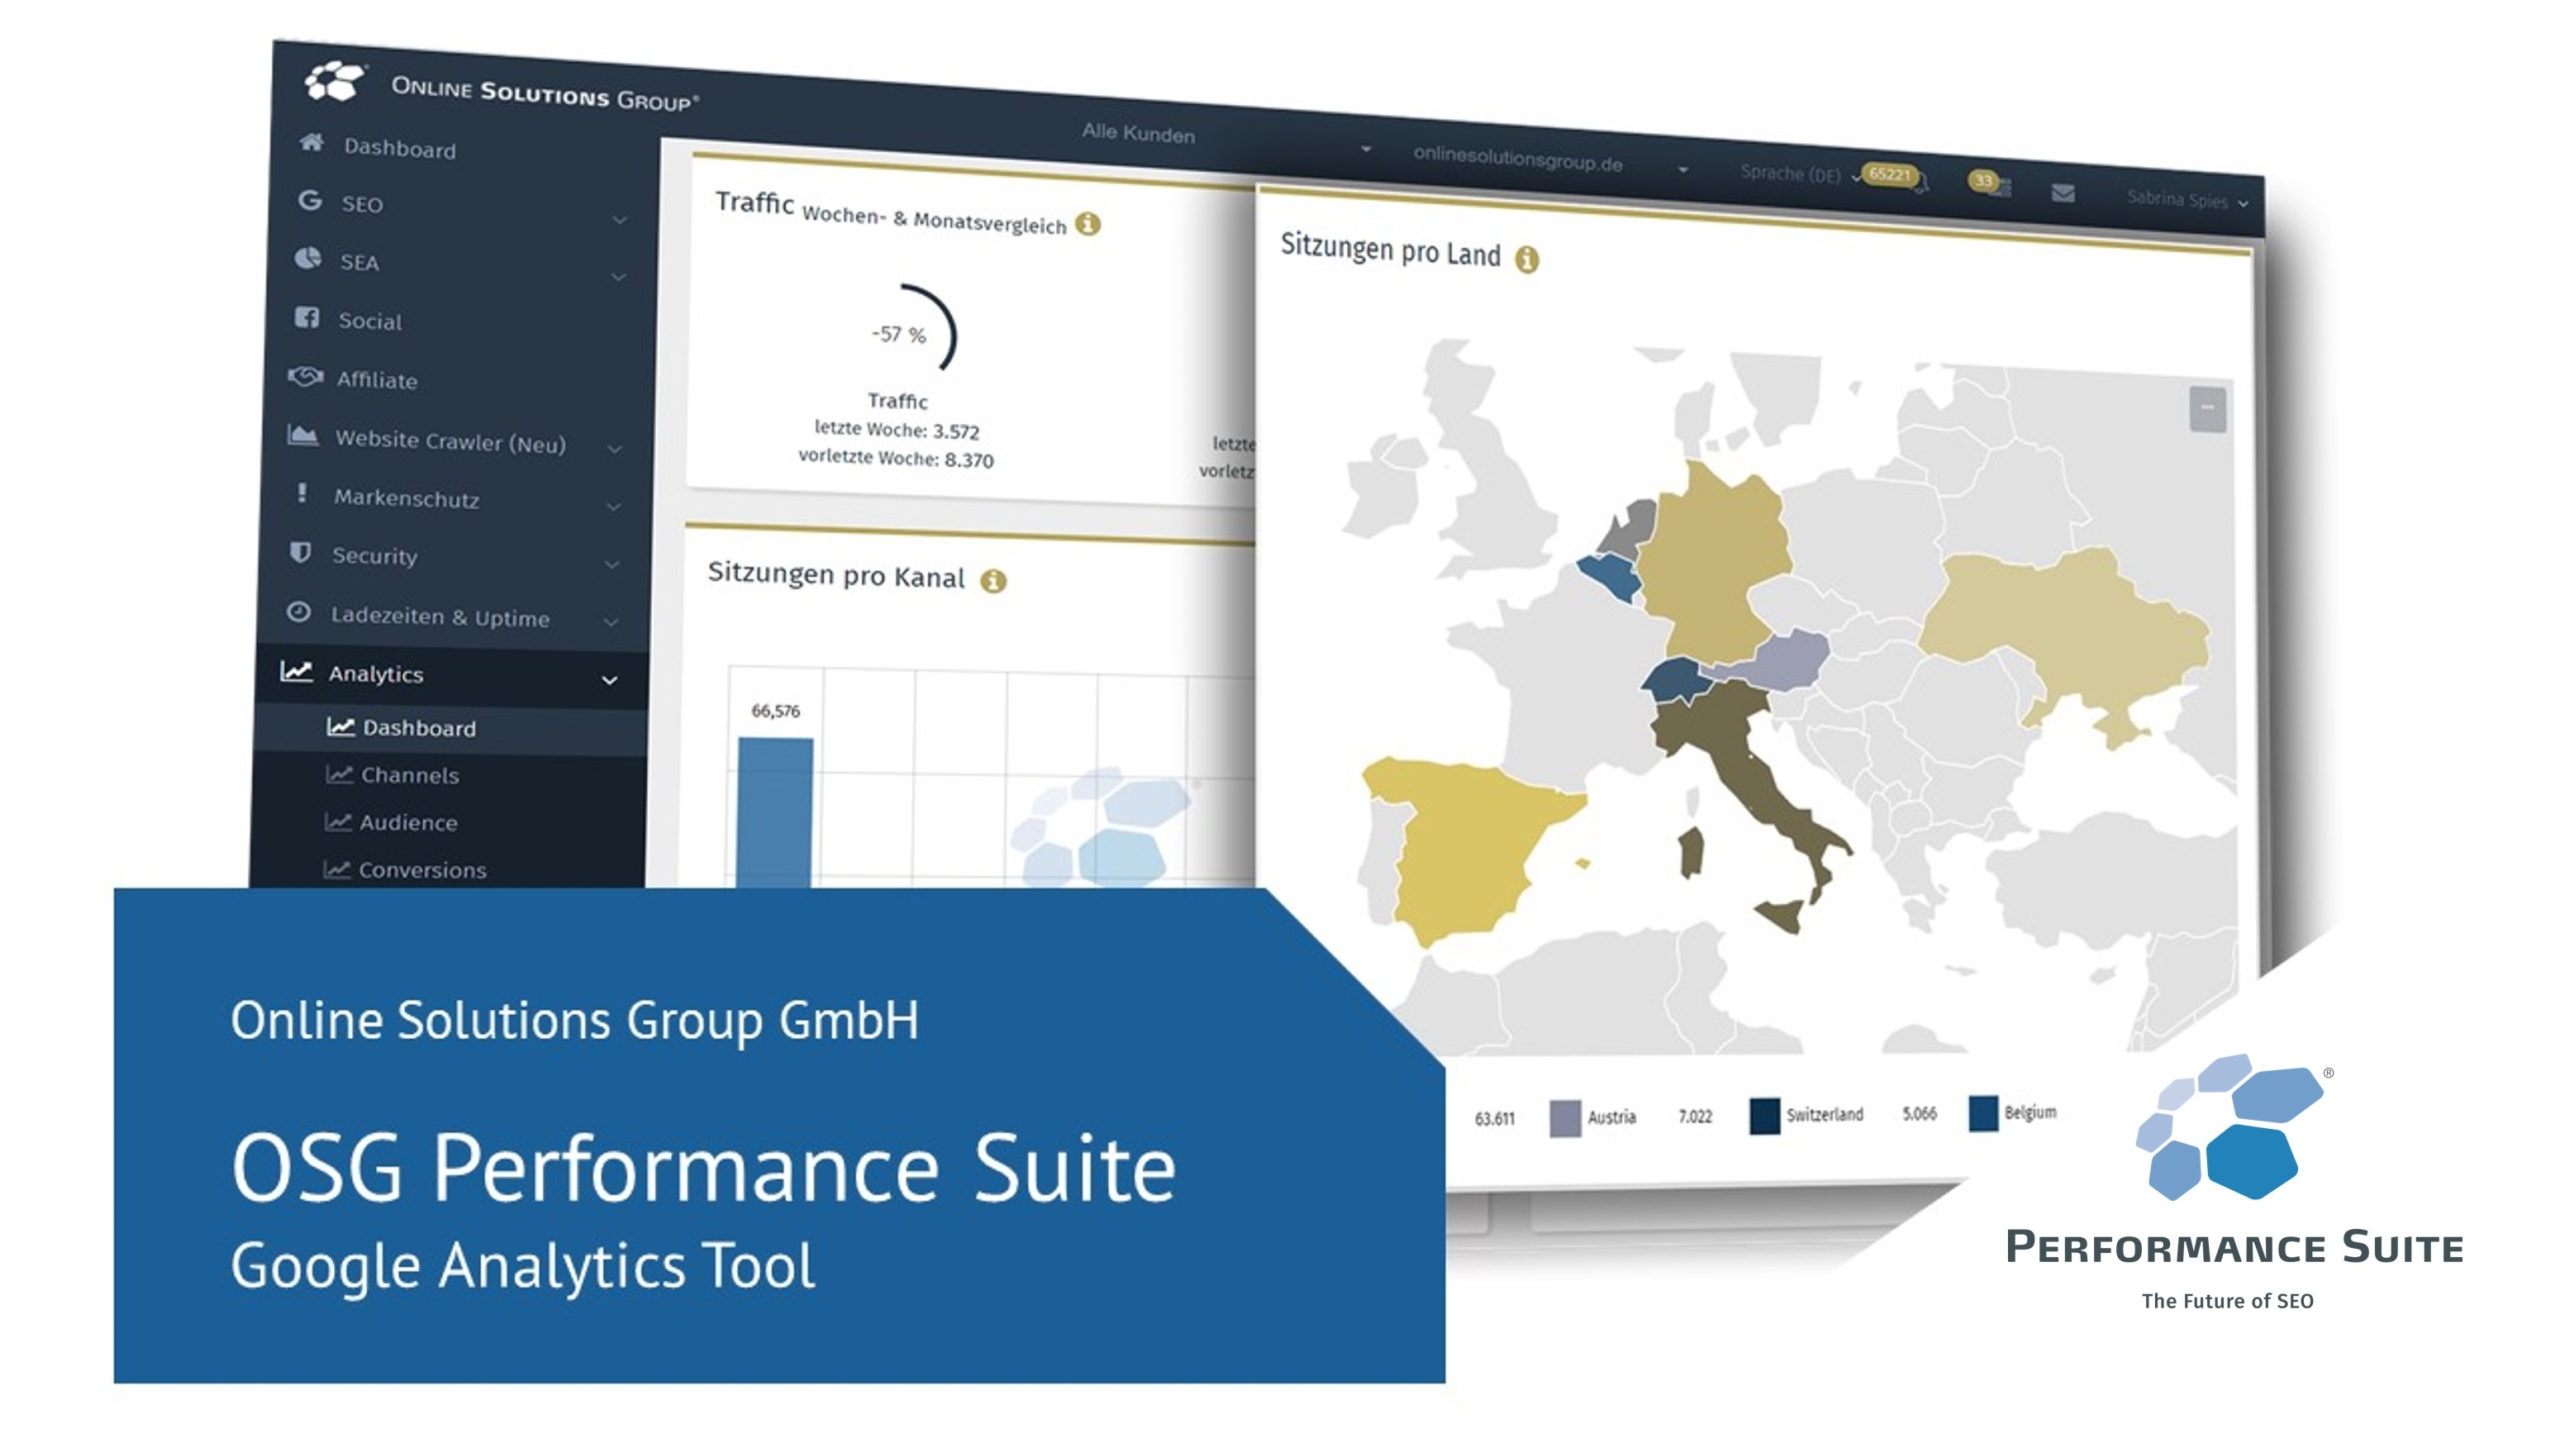 performance-suite-power-point-google-analytics-tool